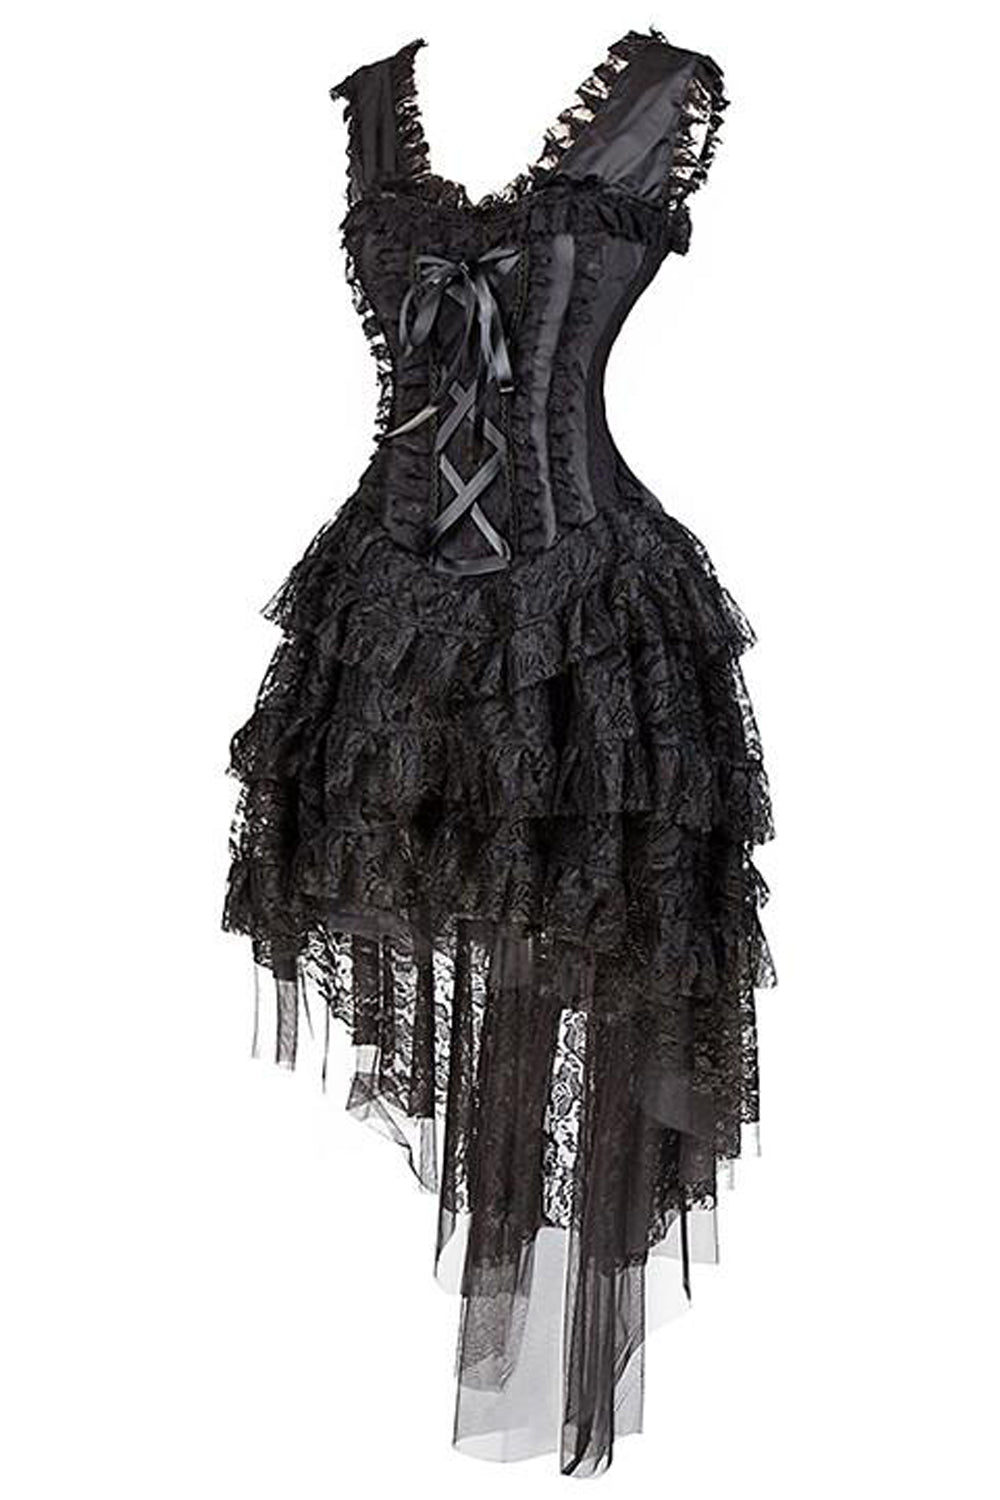 Atomic Black Burlesque Inspired Corset and Skirt Set